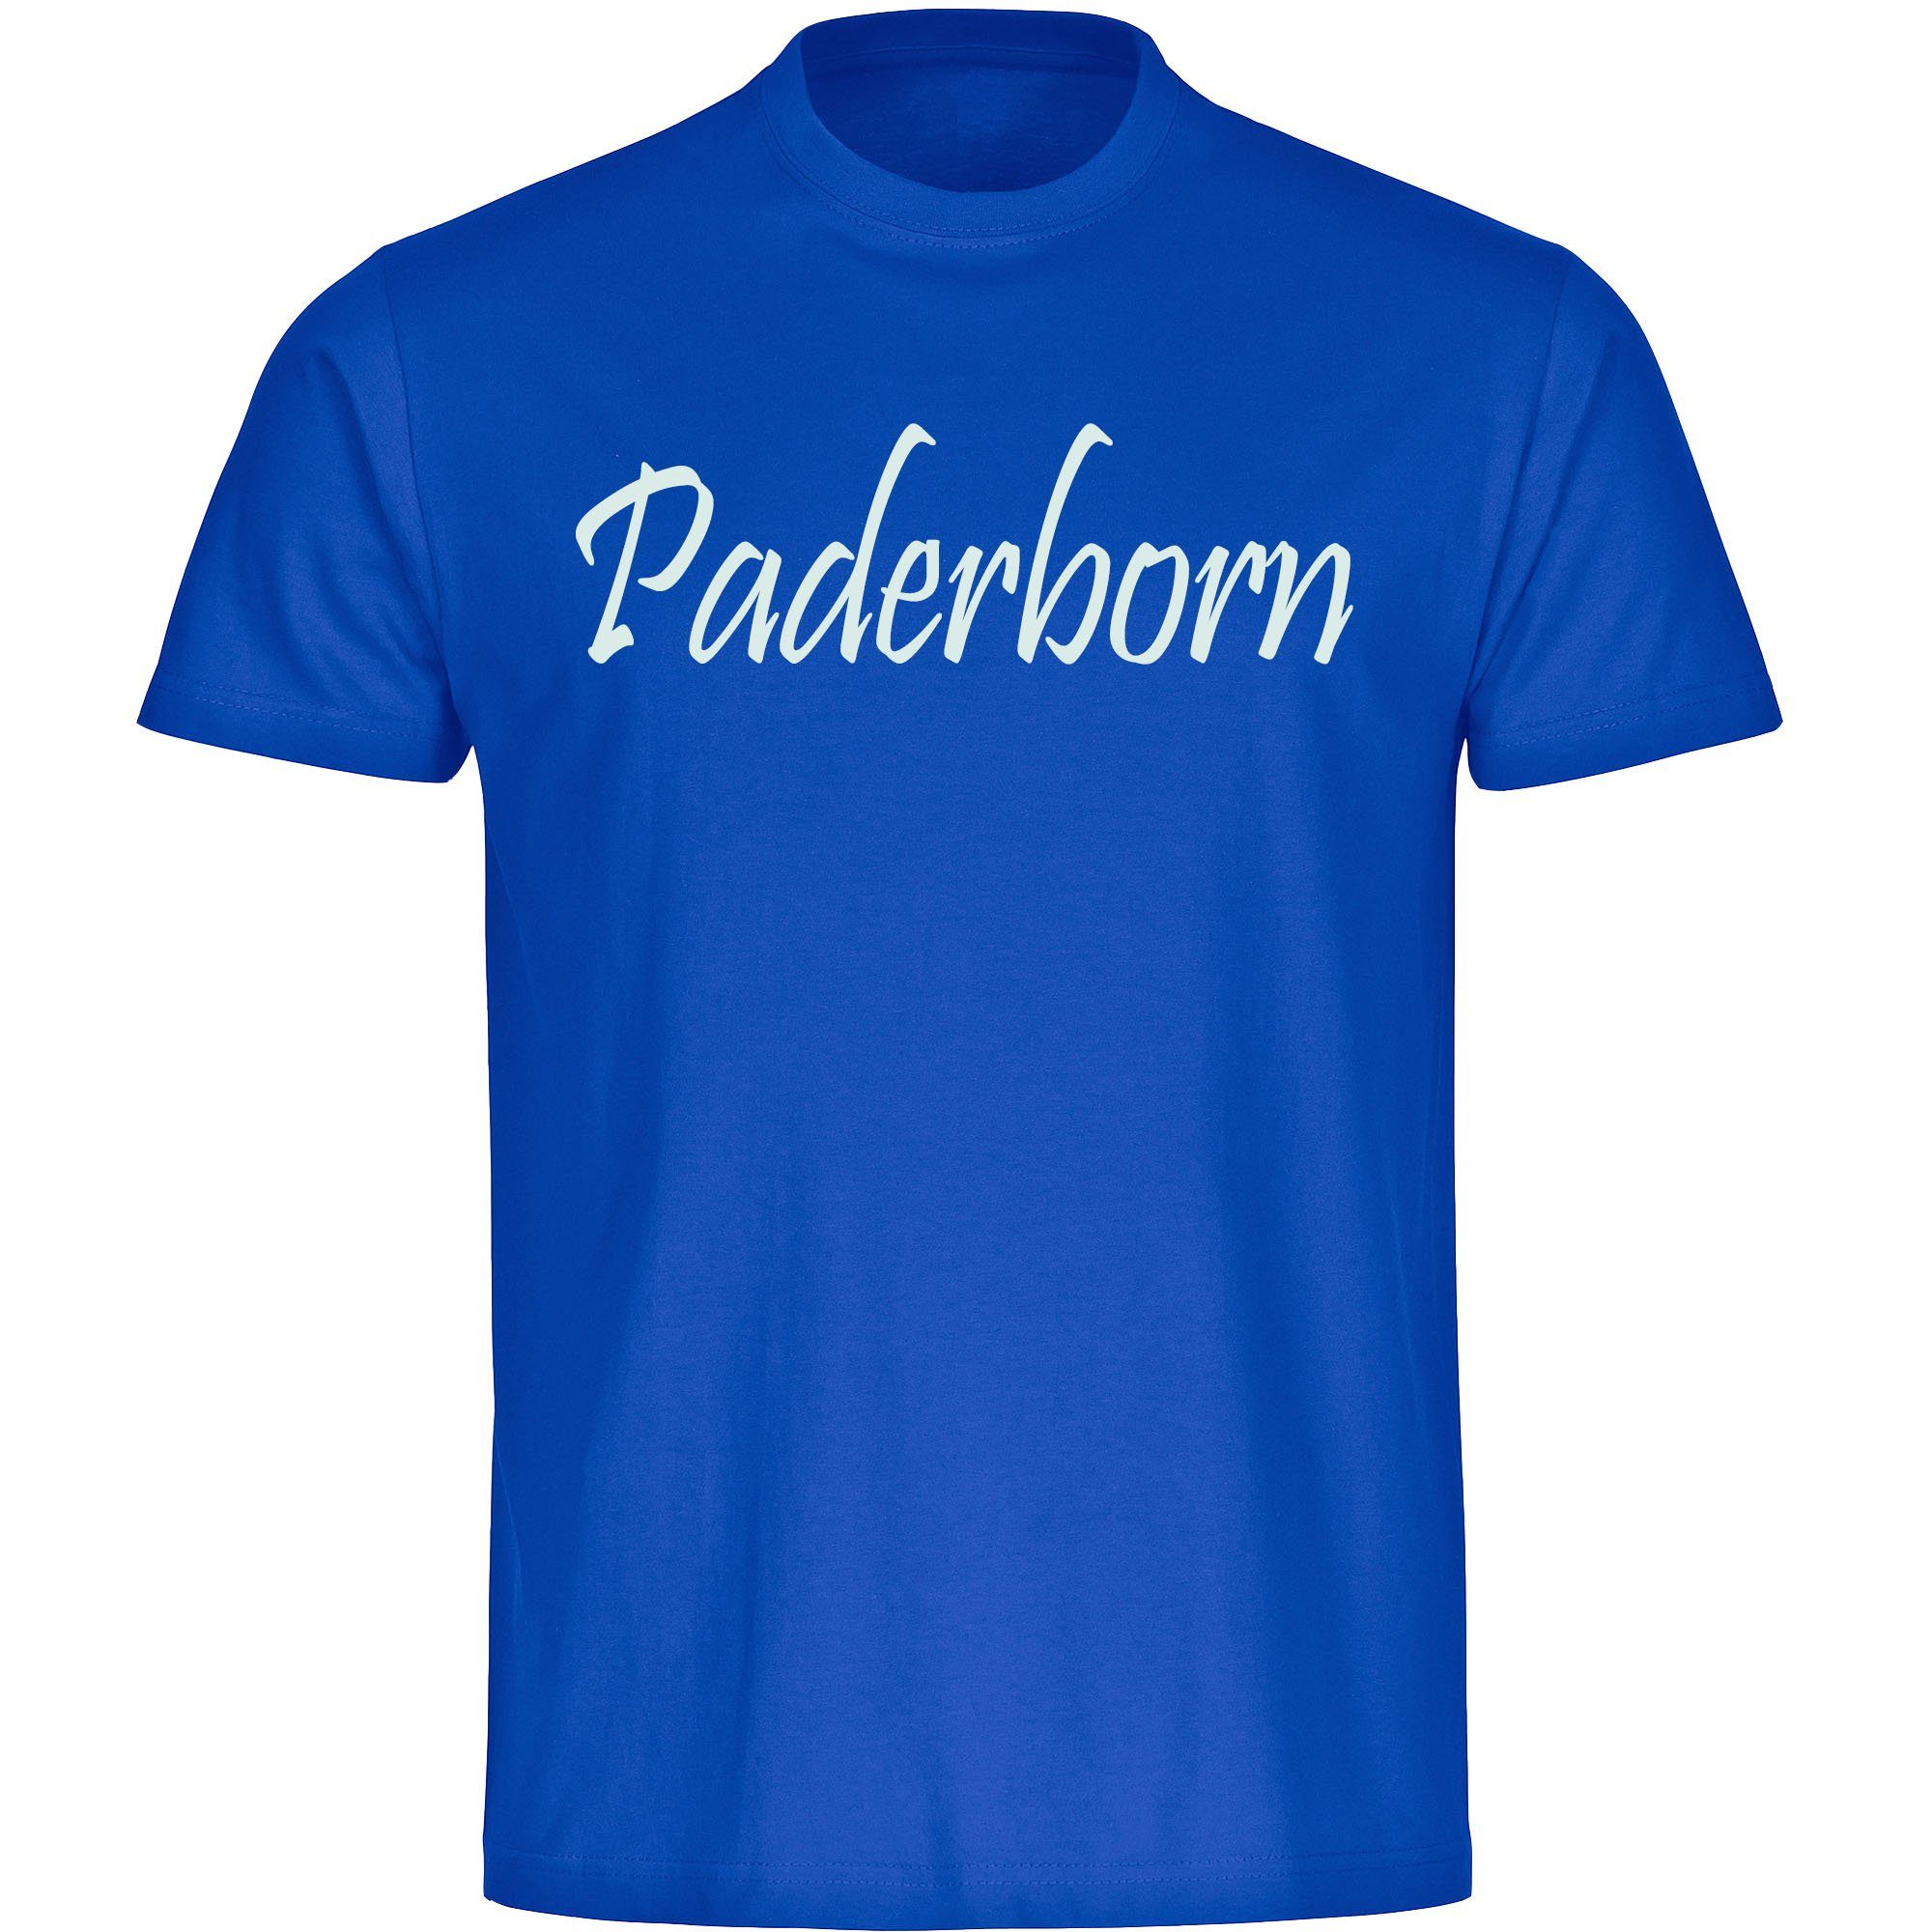 multifanshop T-Shirt Kinder Paderborn - Schriftzug - Boy Girl